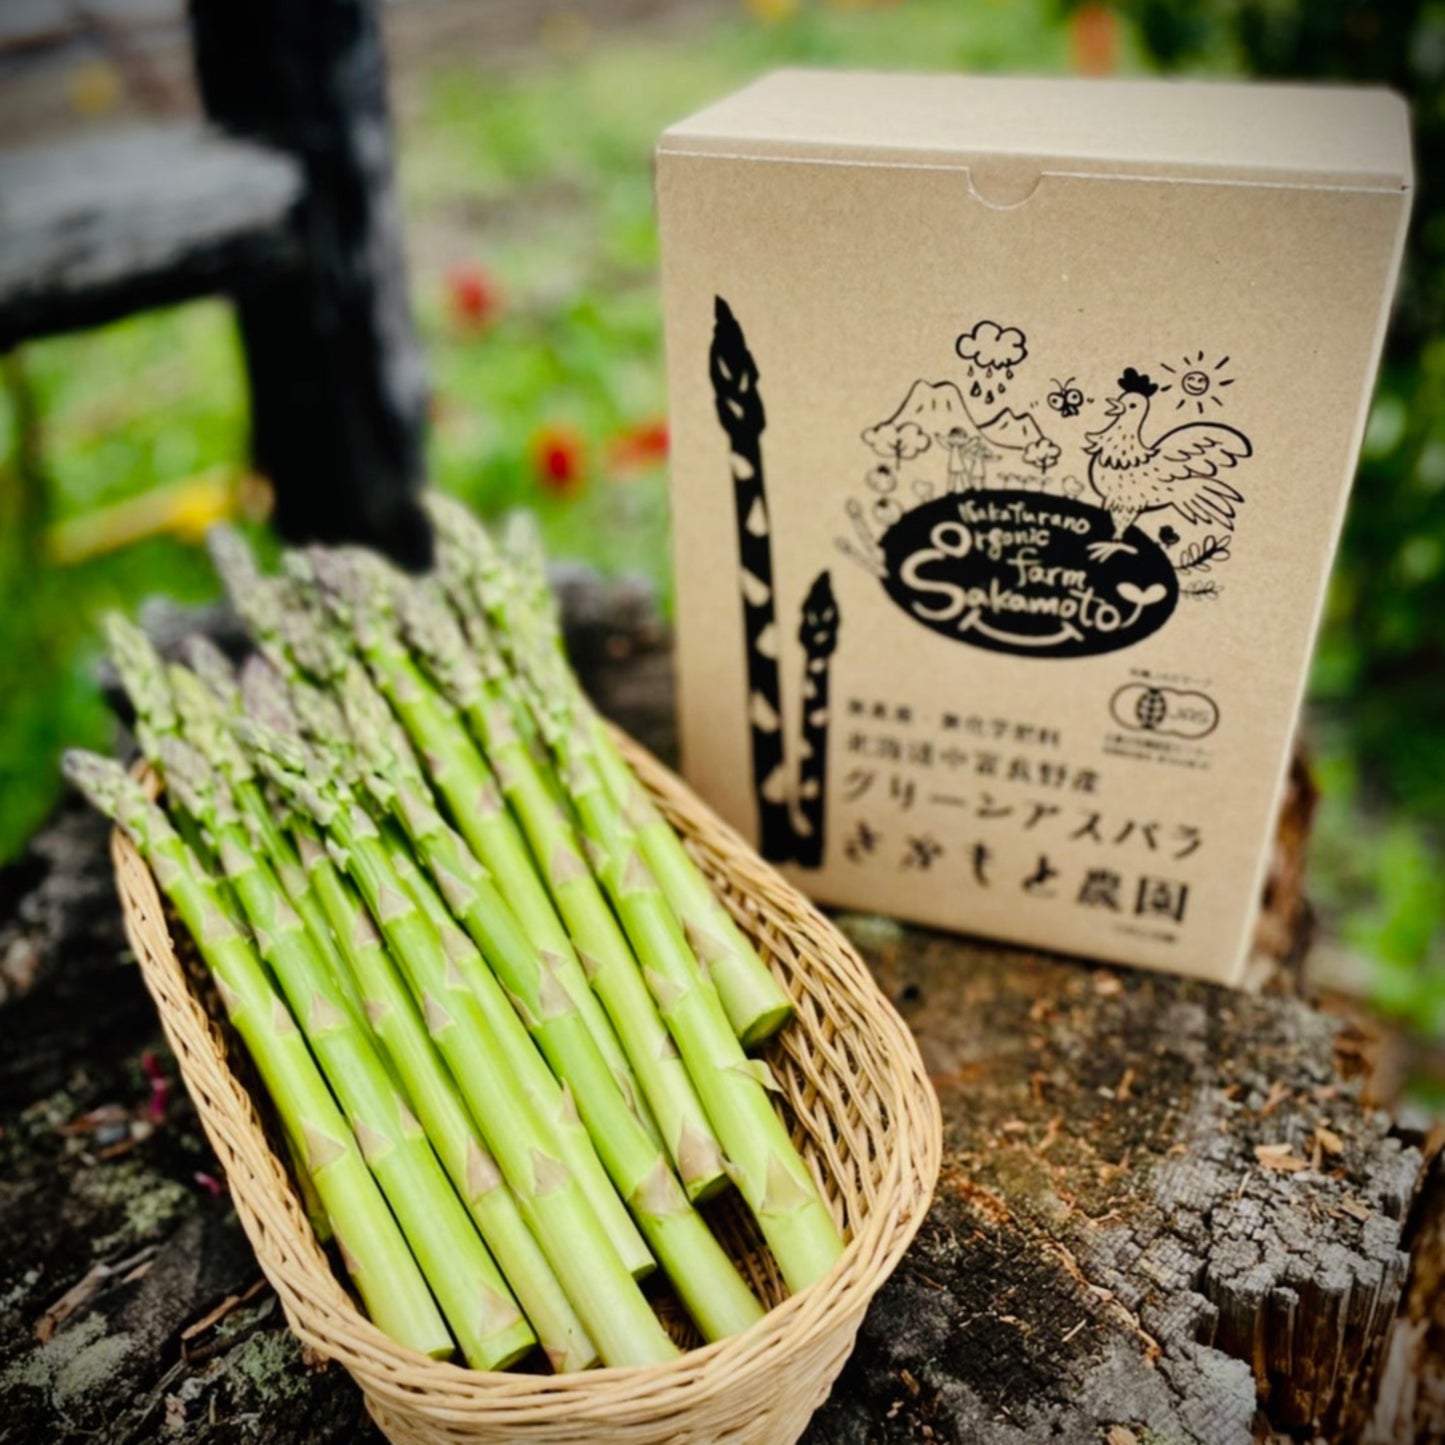 Green asparagus from farm Sakamoto